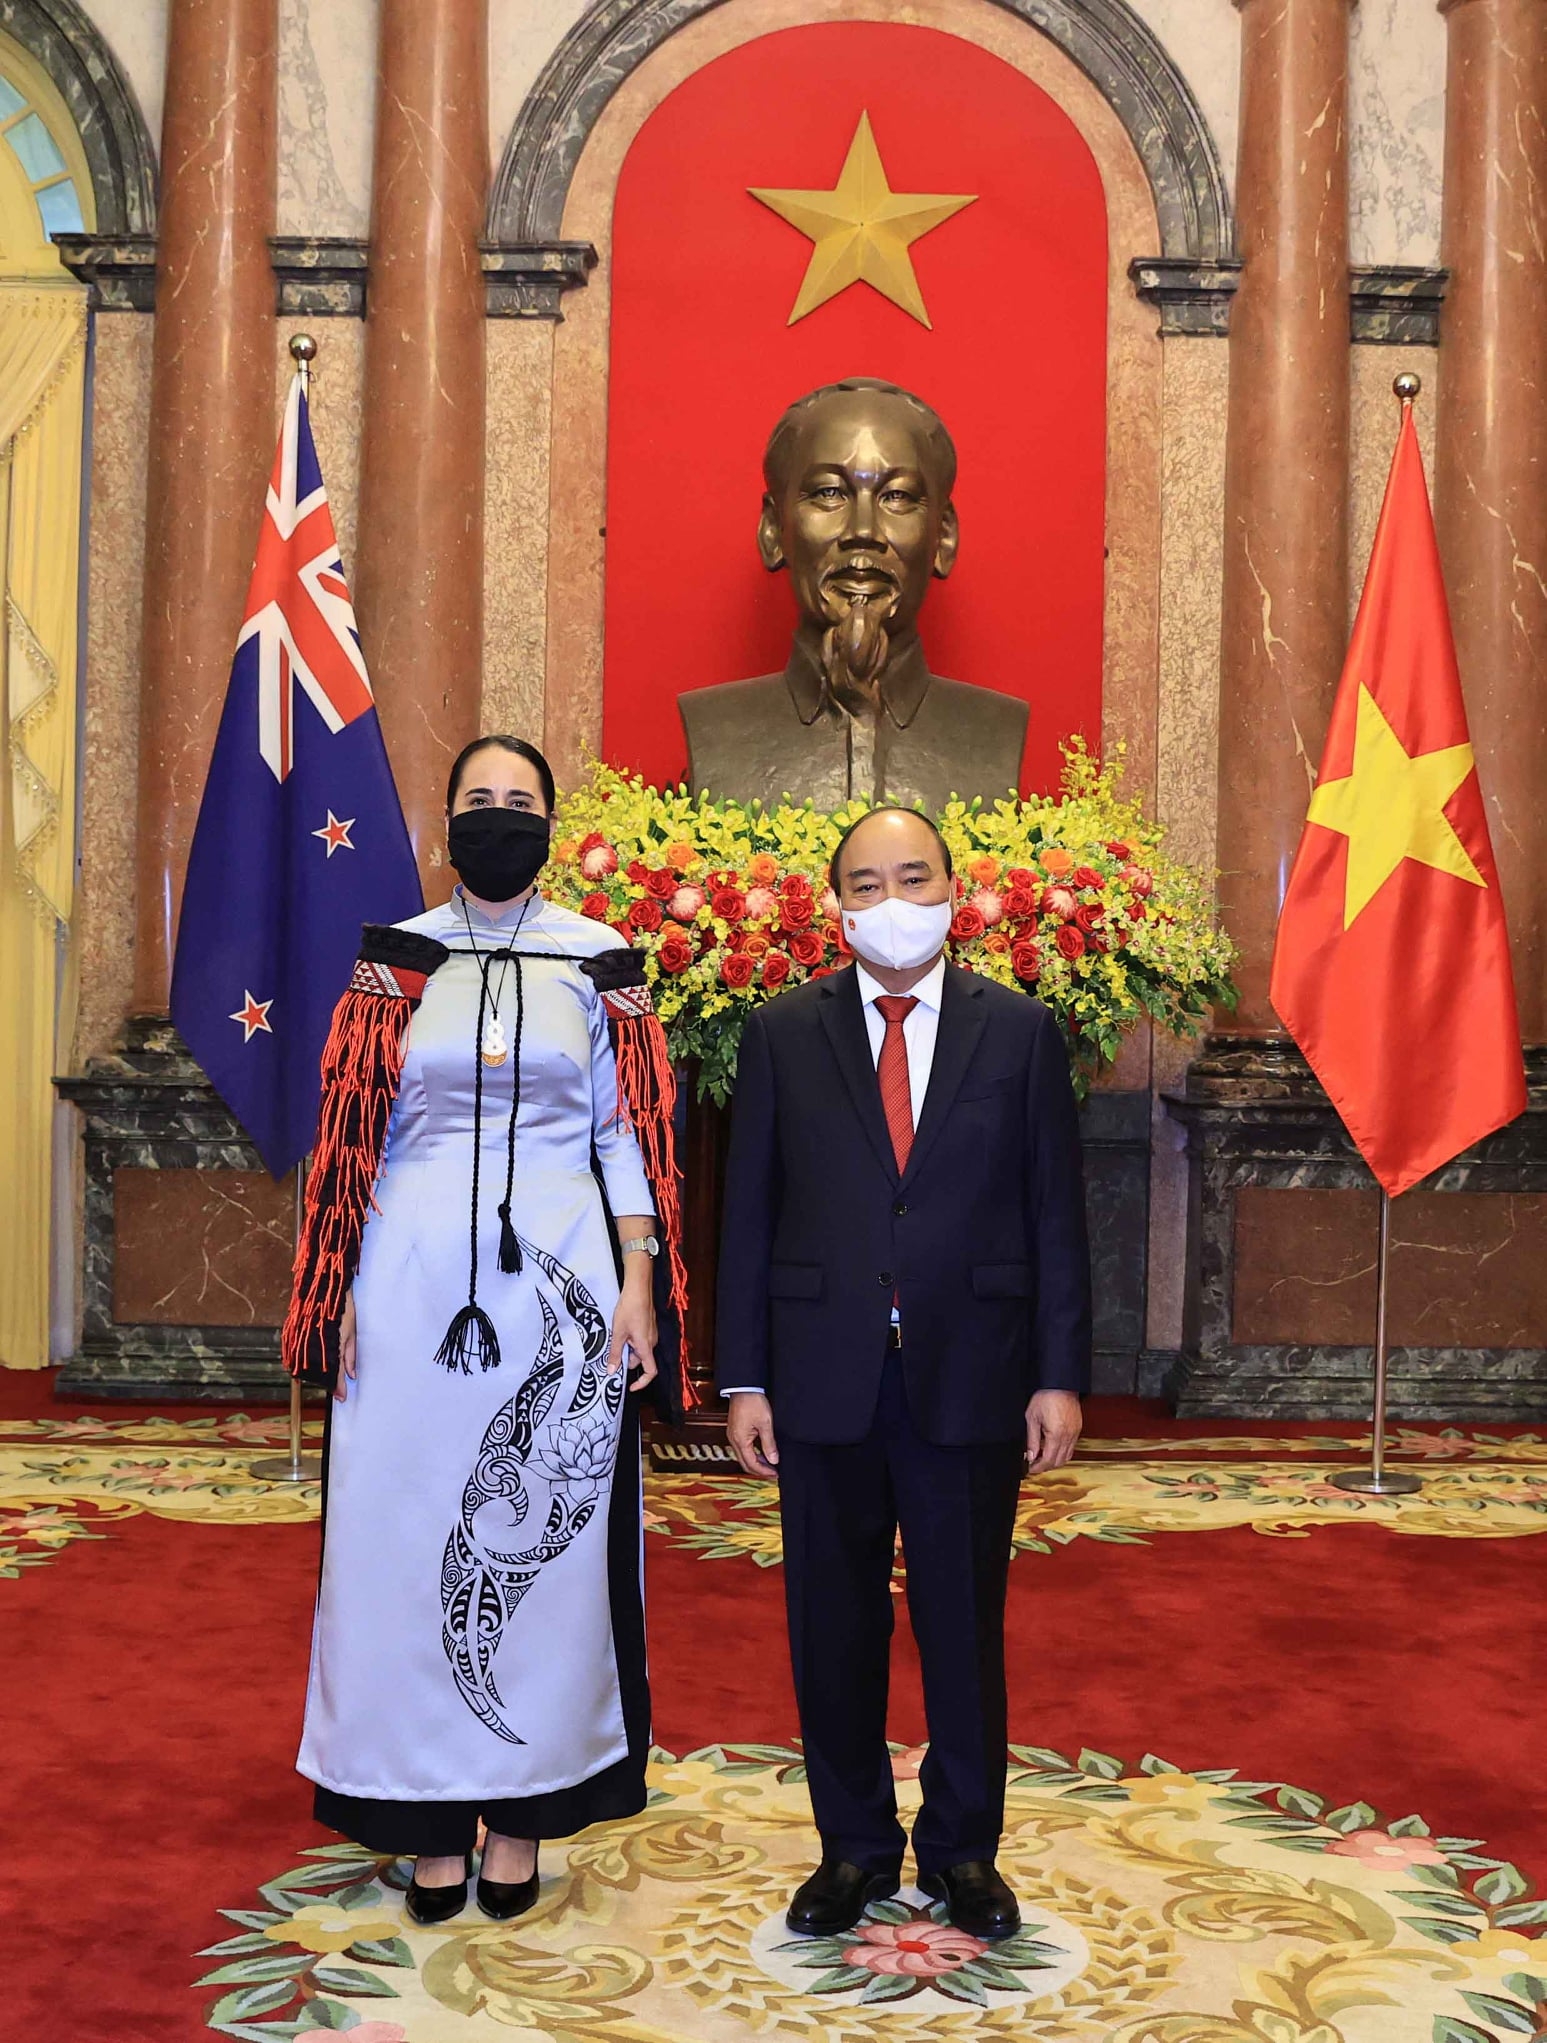 Ambassador's ao dai showcases Vietnamese and New Zealand cultural connections